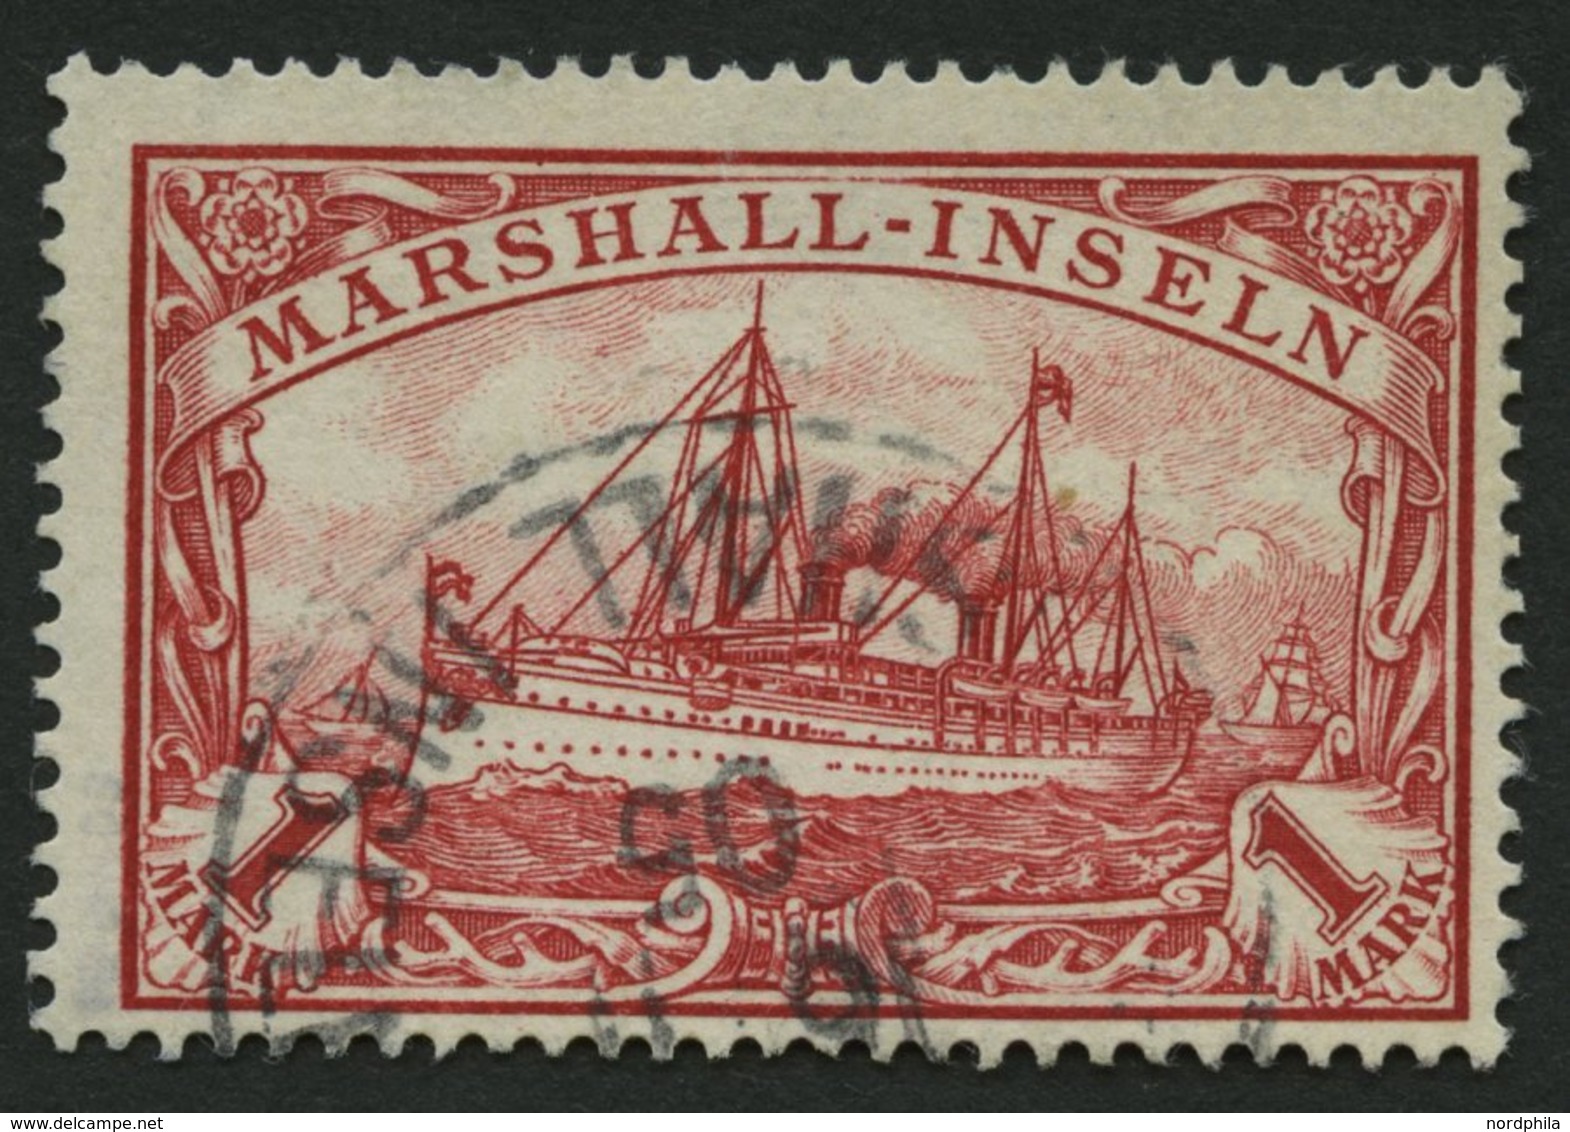 MARSHALL-INSELN 22 O, 1901, 1 M. Rot, Pracht, Gepr. Bothe, Mi. 100.- - Marshall Islands